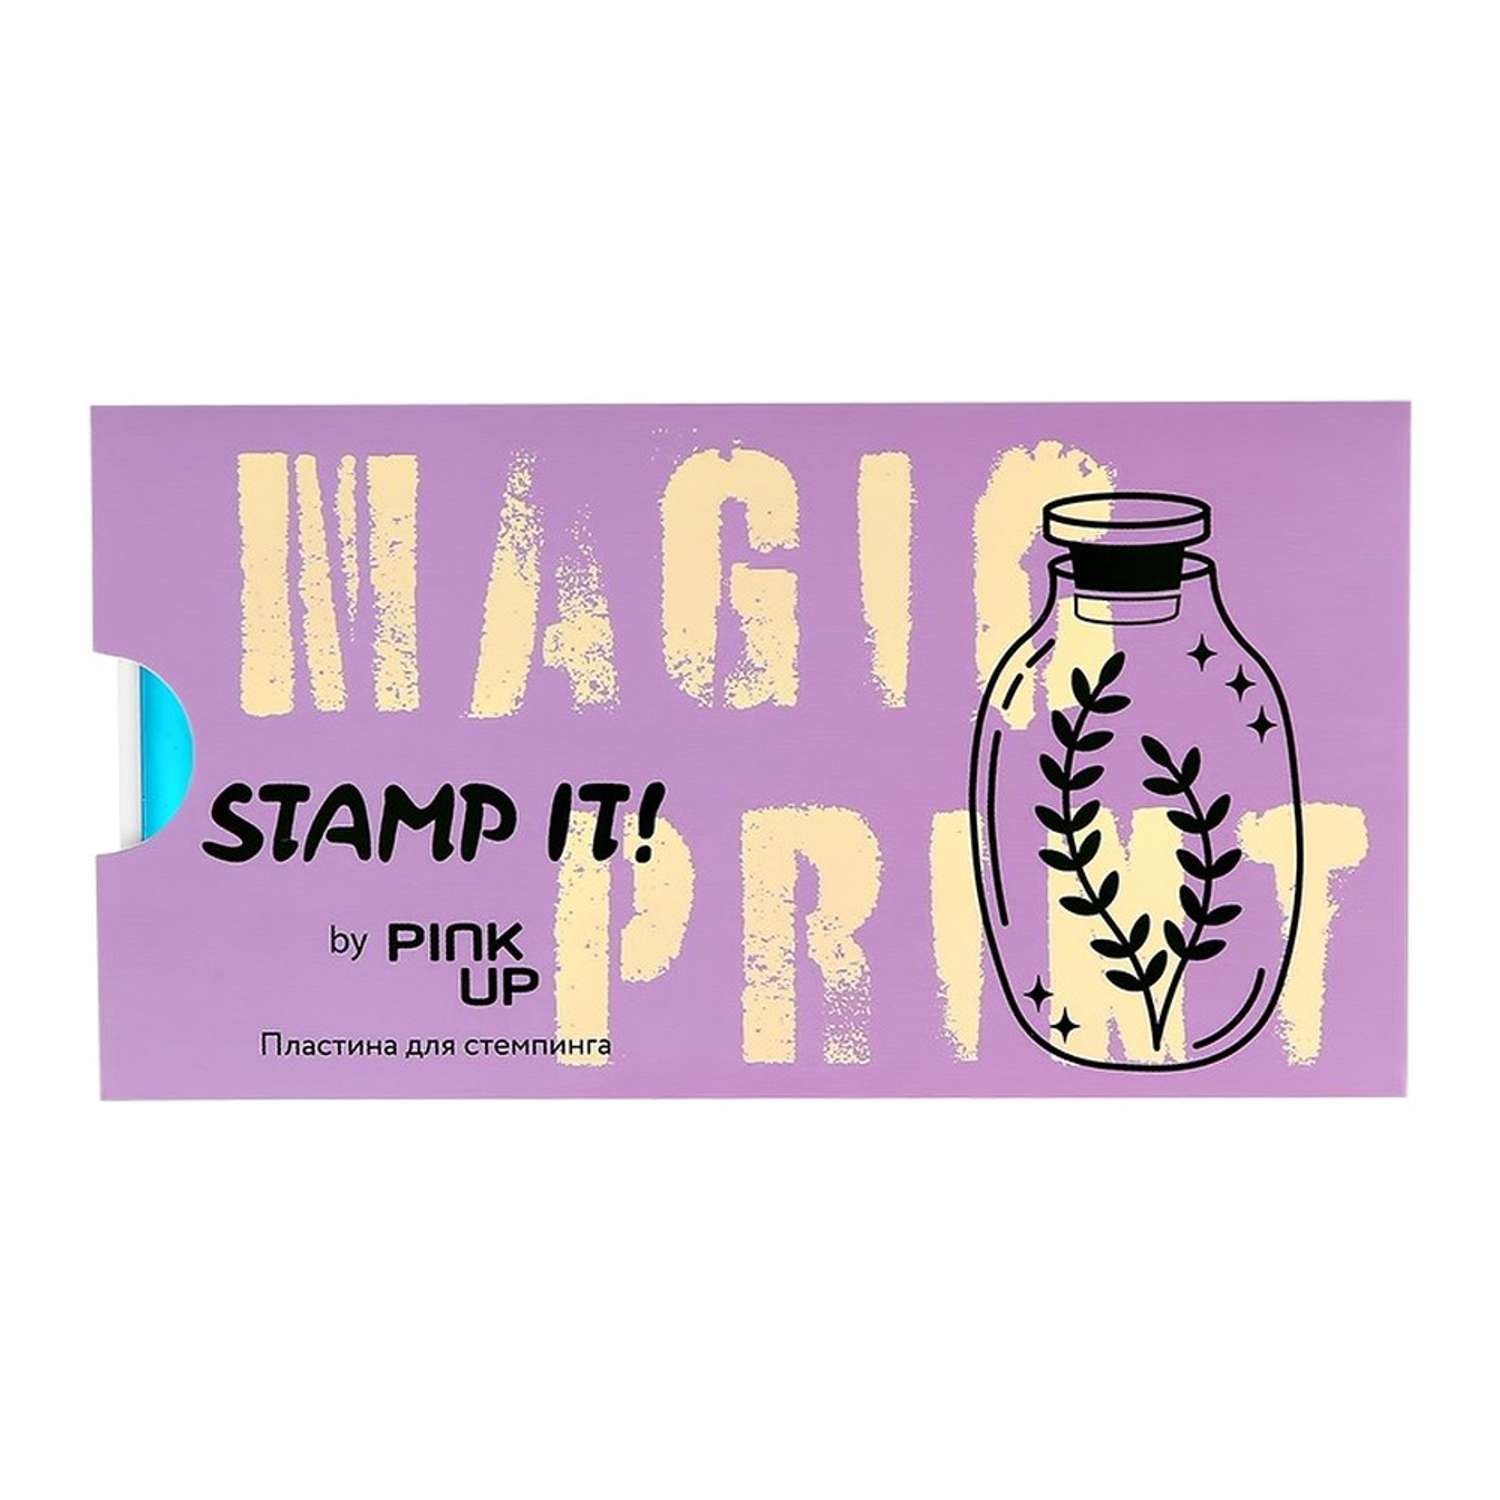 Пластина для стемпинга Pink Up stamp it! magic print - фото 3